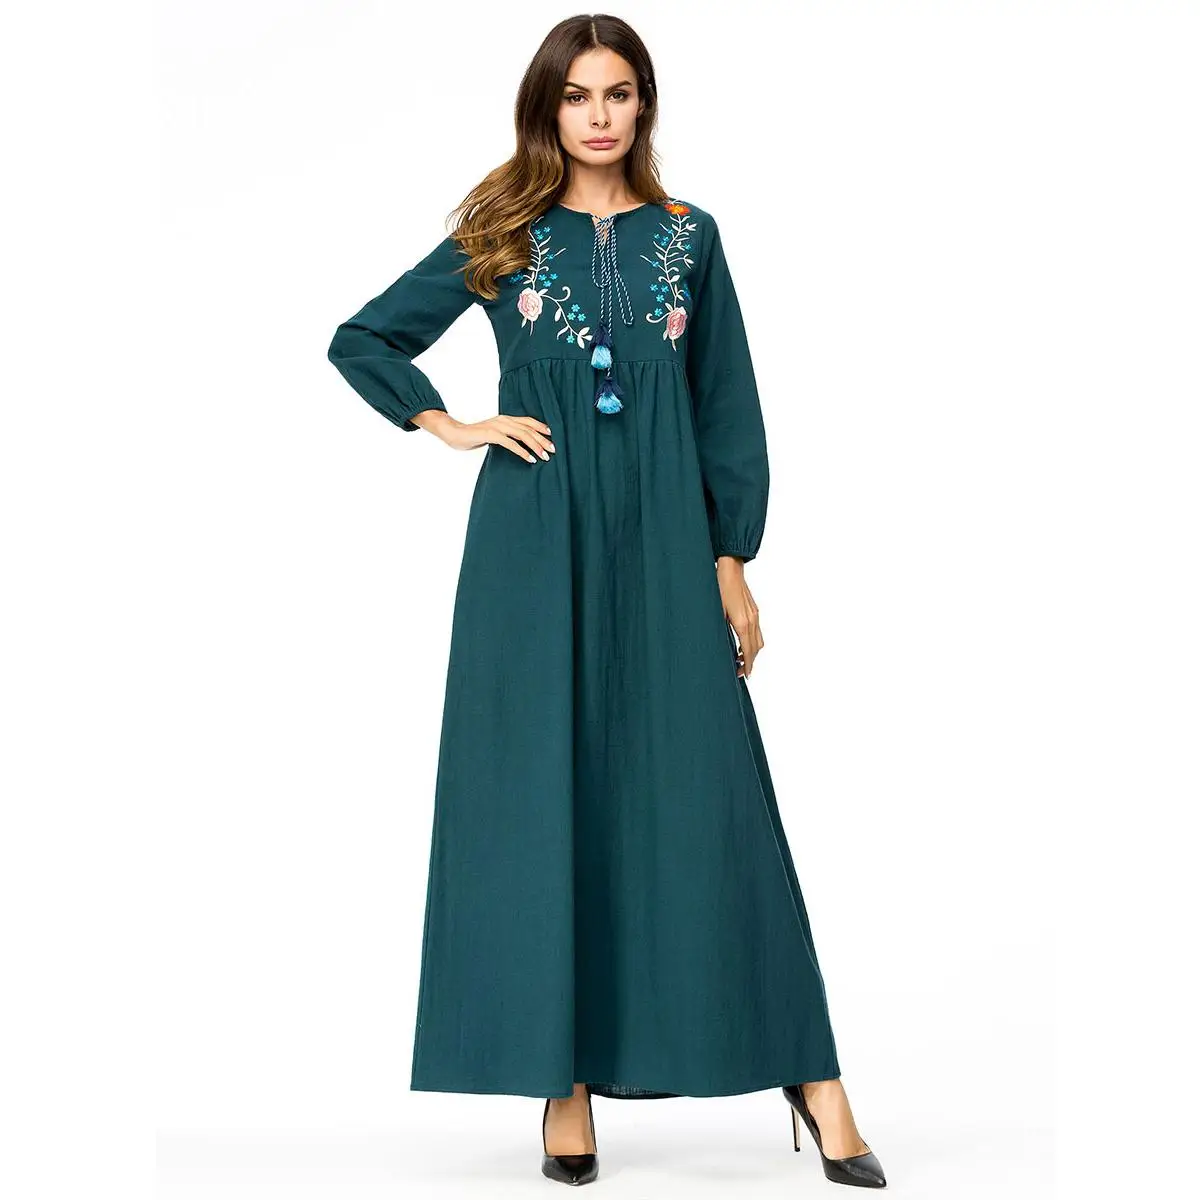 Новое мусульманское платье женская мусульманская одежда марокканский кафтан национальный стиль вышивка цветок абайя s халат Дубай Абая Турецкая одежда - Цвет: As the picture